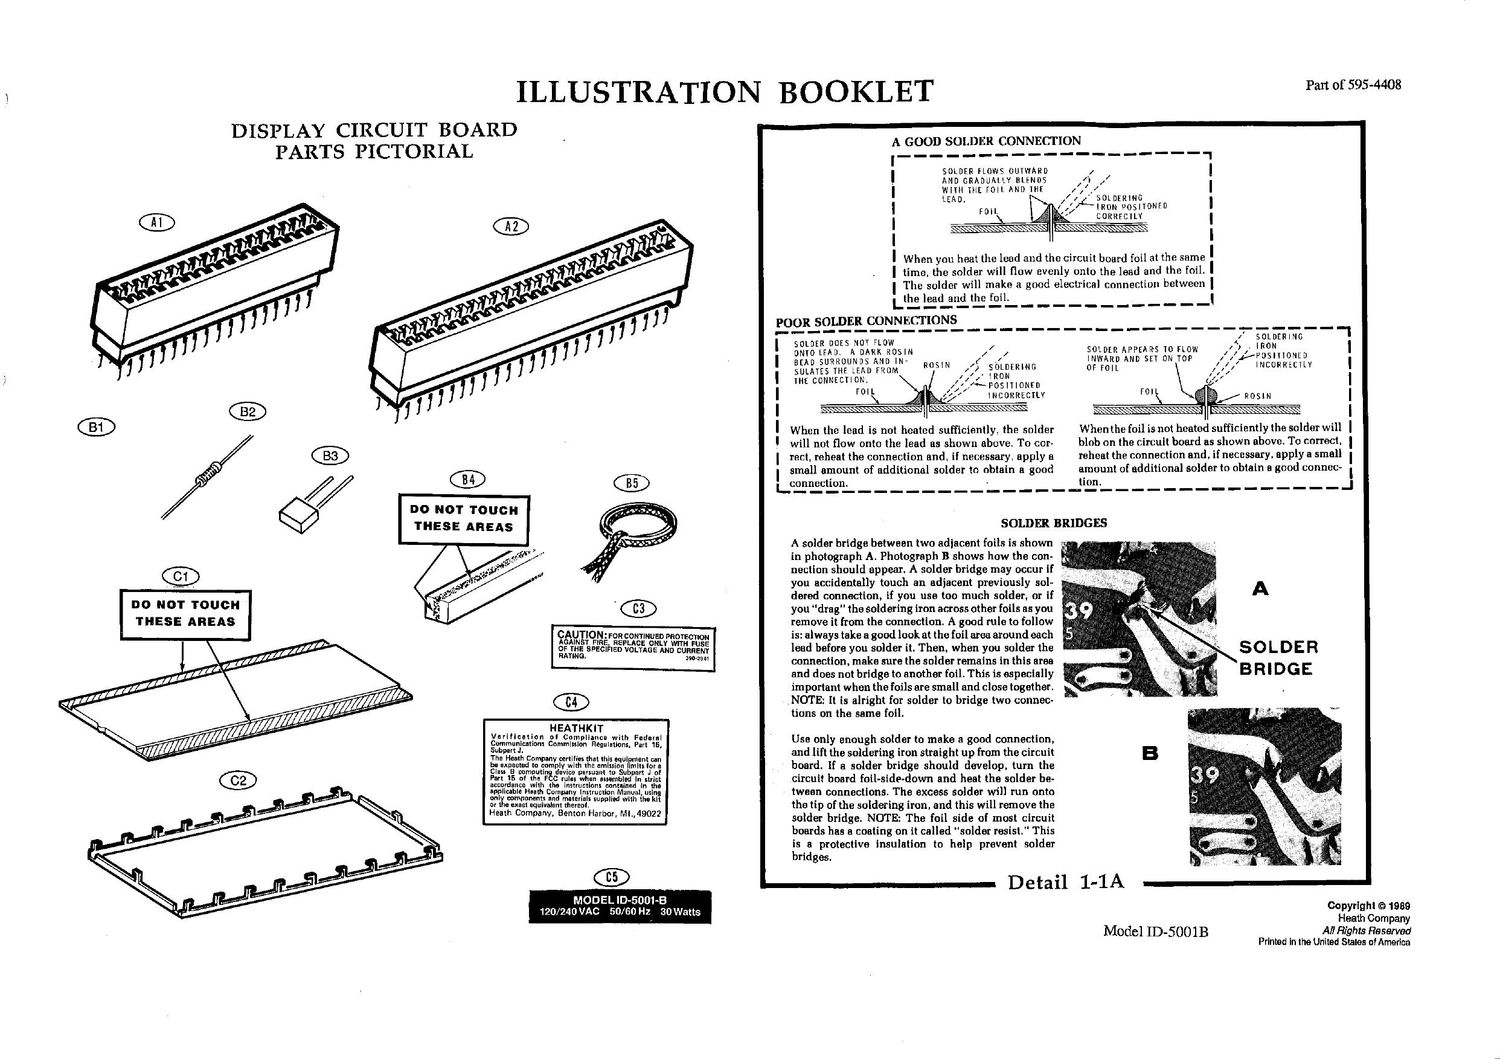 Heathkit ID 5001 Illustration Booklet A